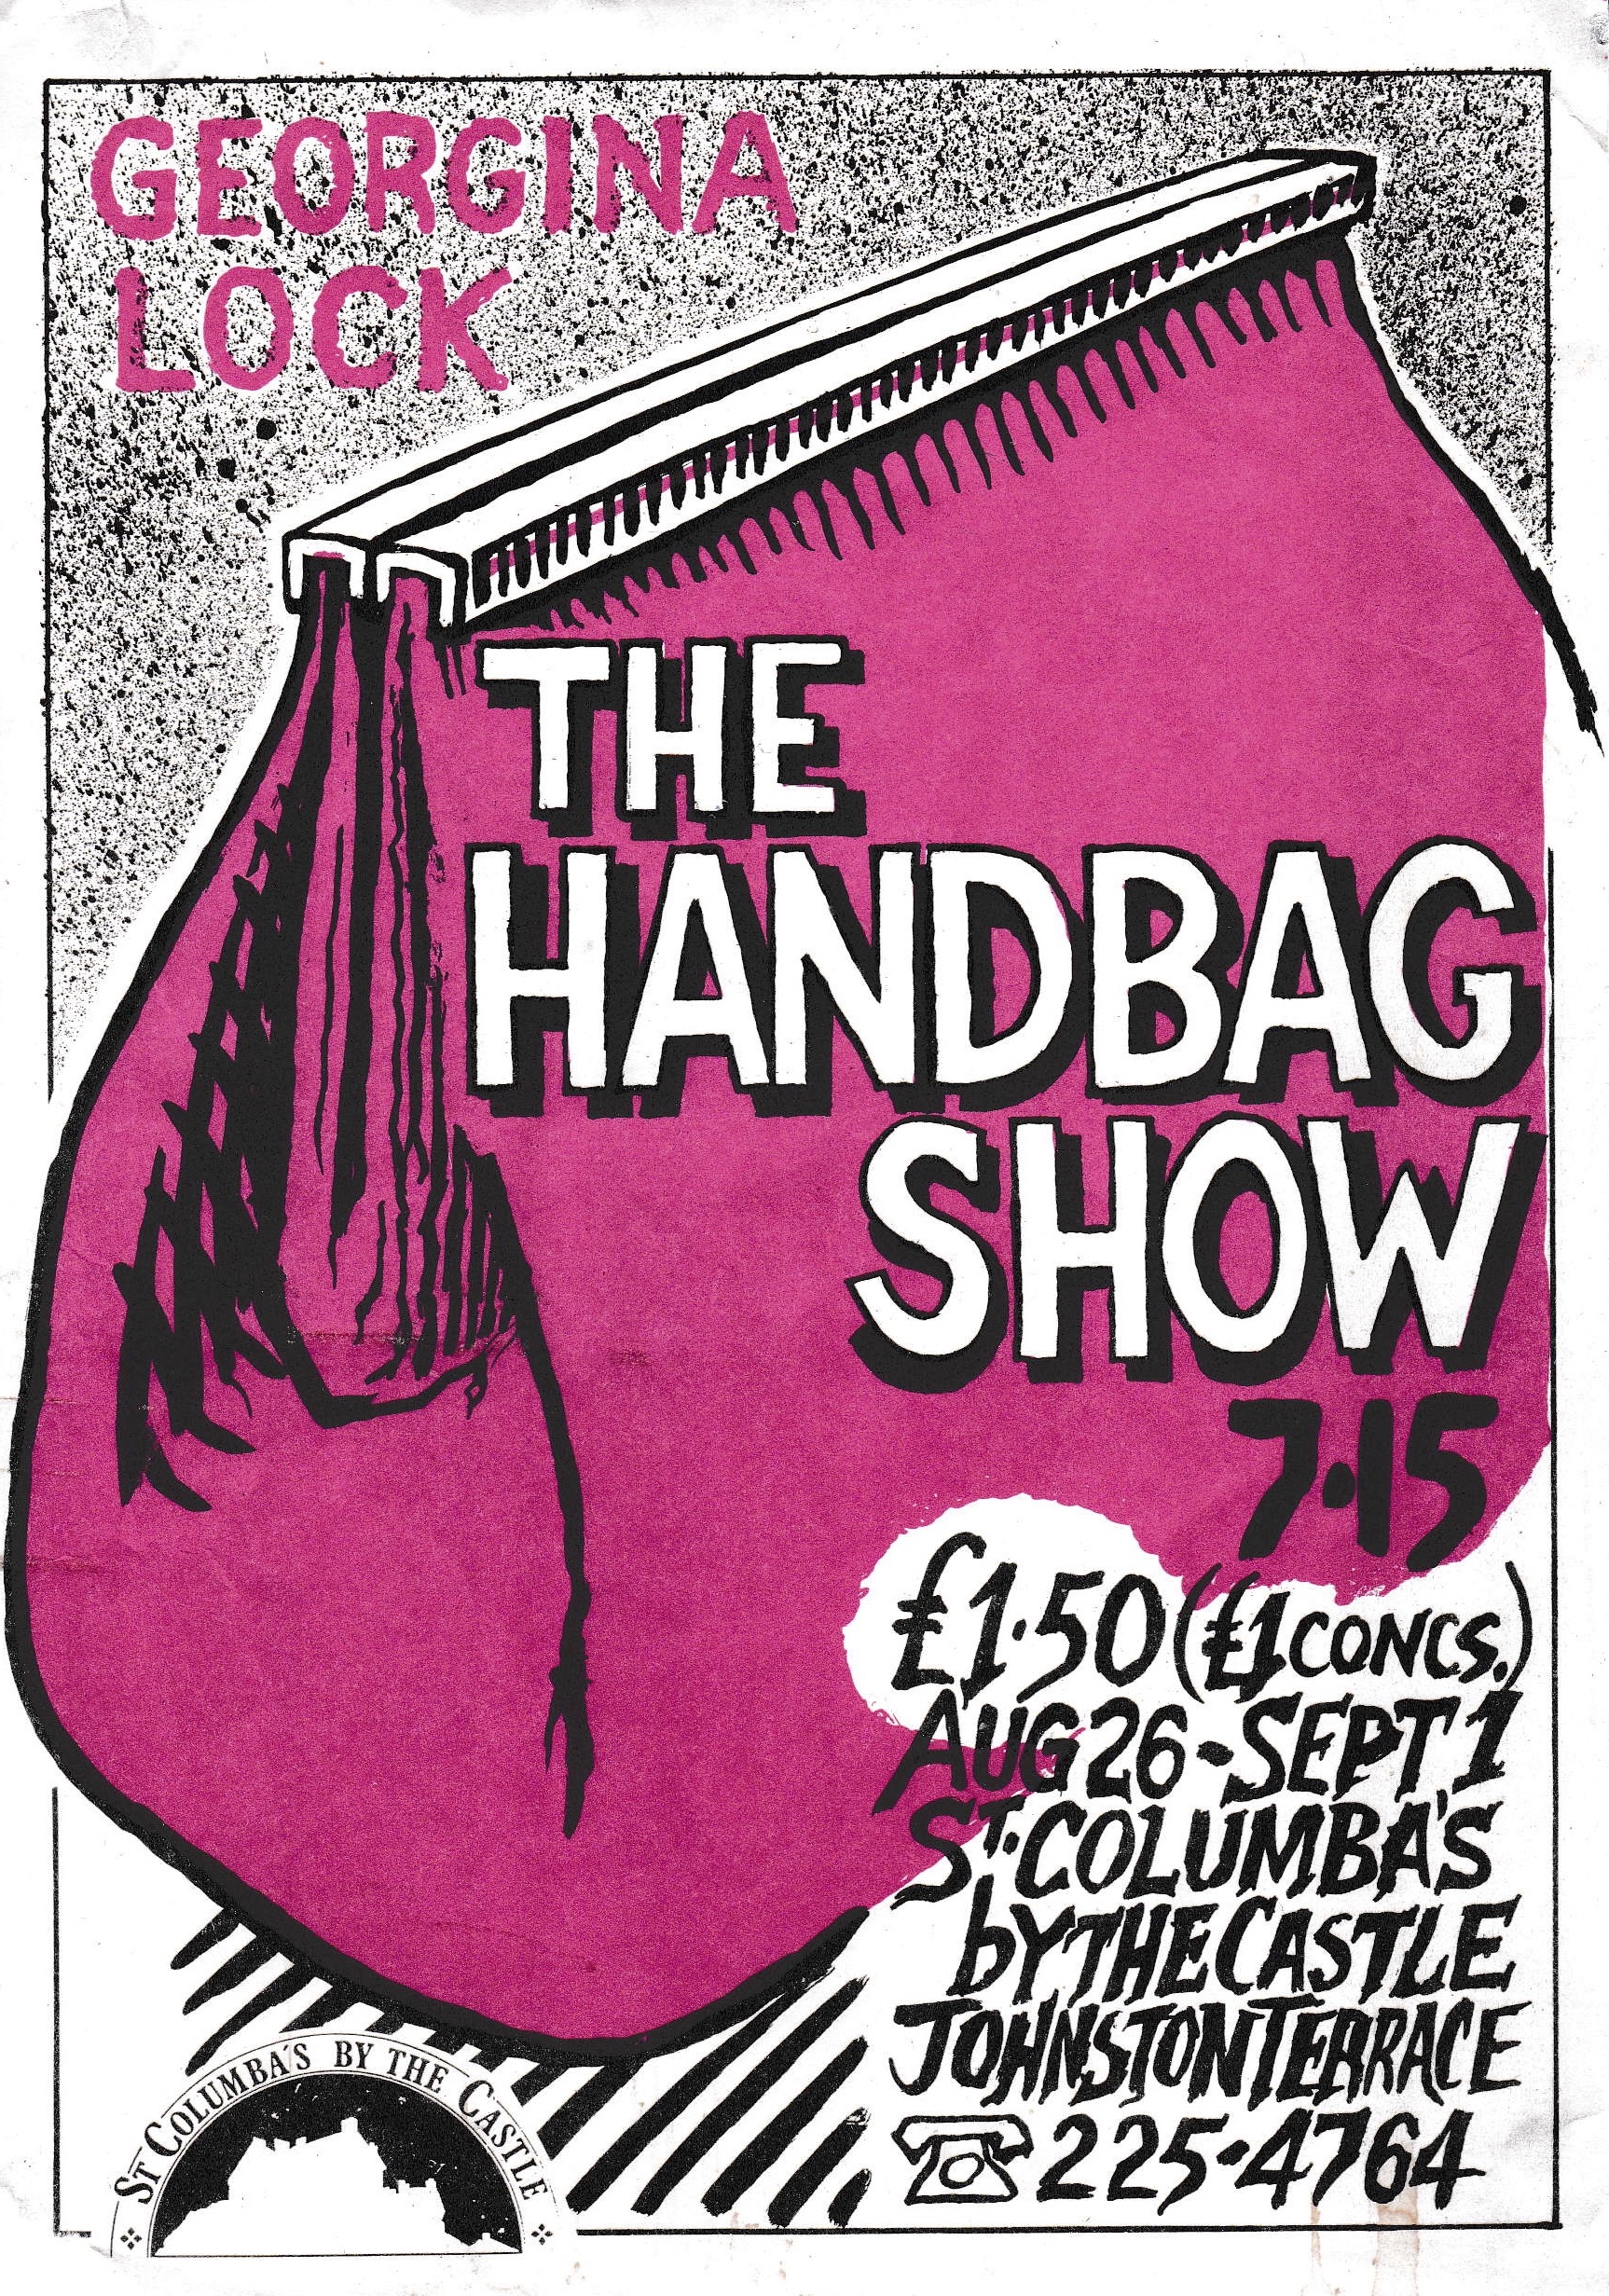 The Handbag Show flyer